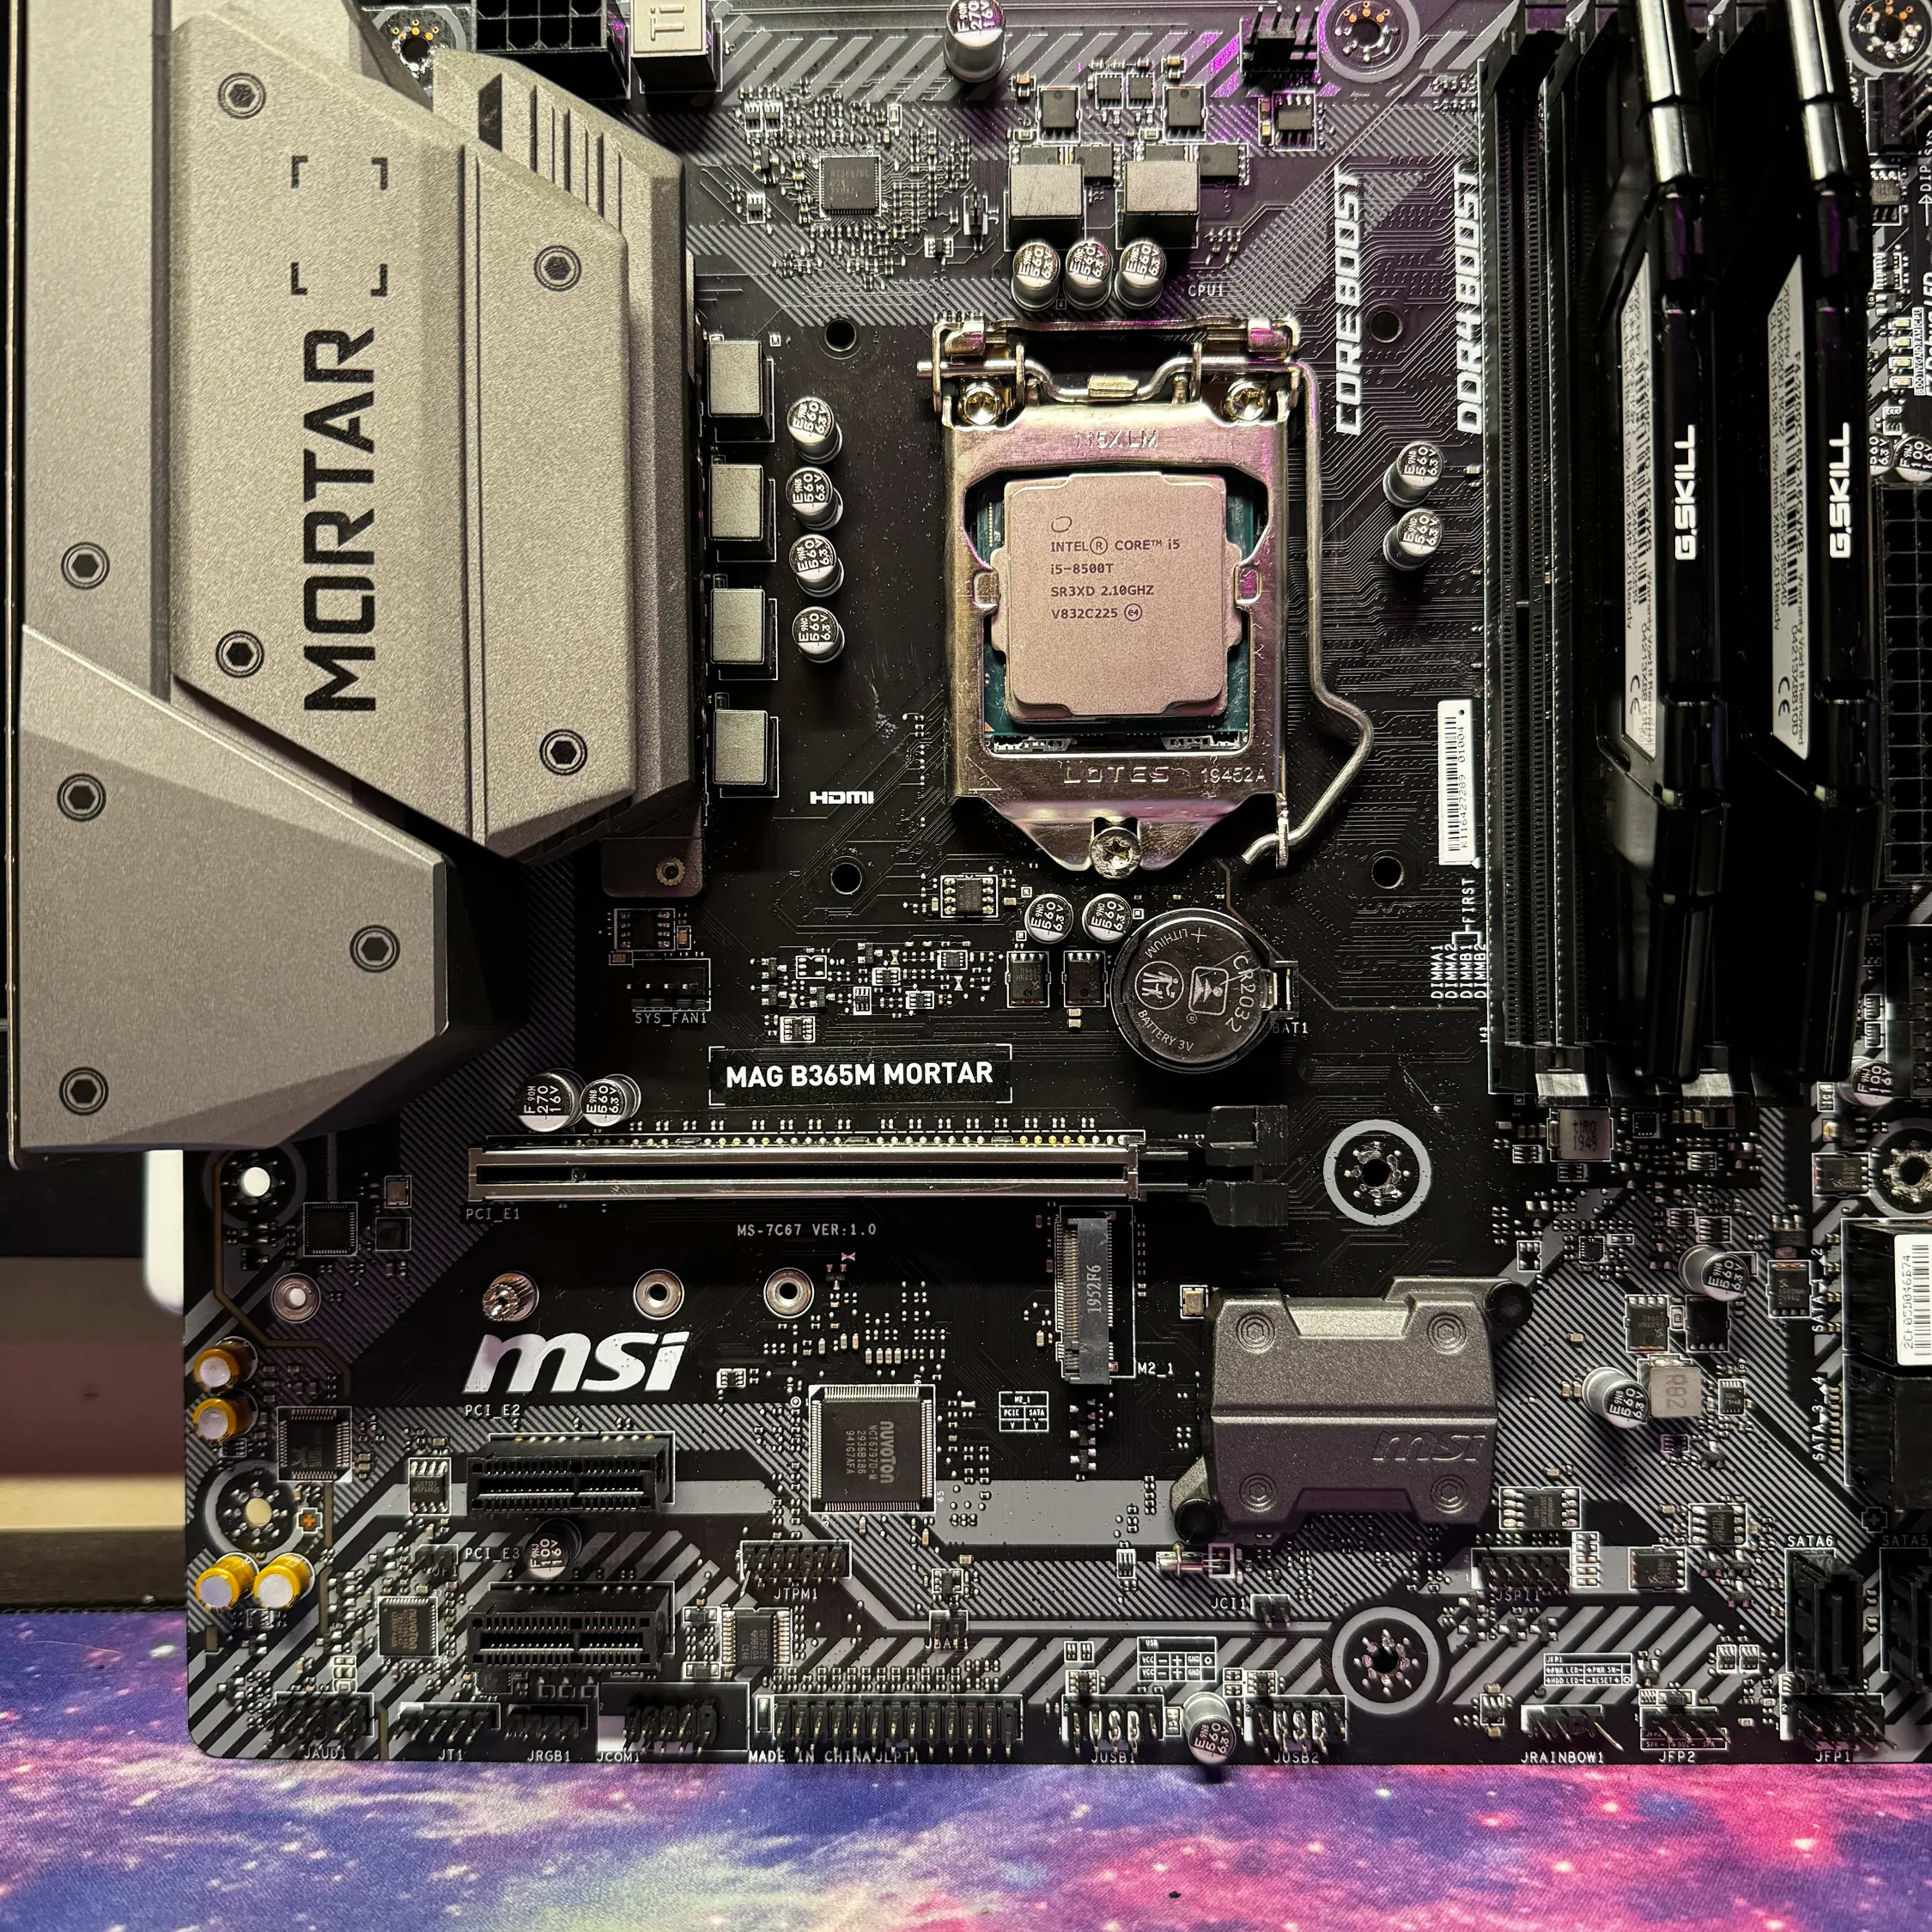 Motherboard + CPU + RAM Combo